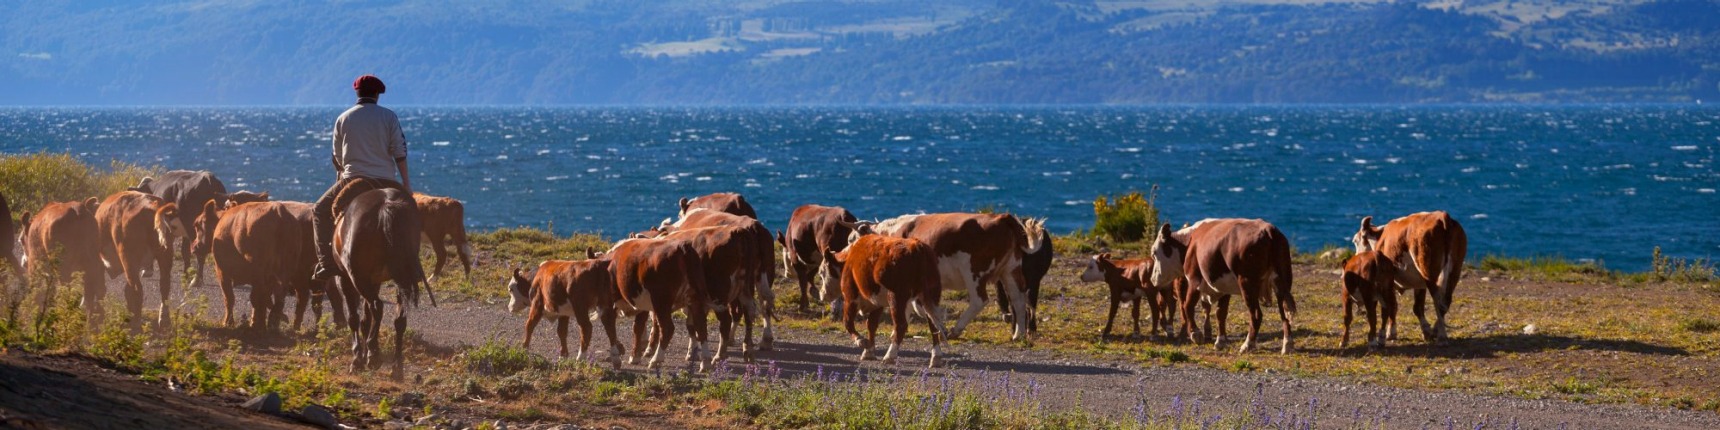 Argentina, countryside, farmer herding cows